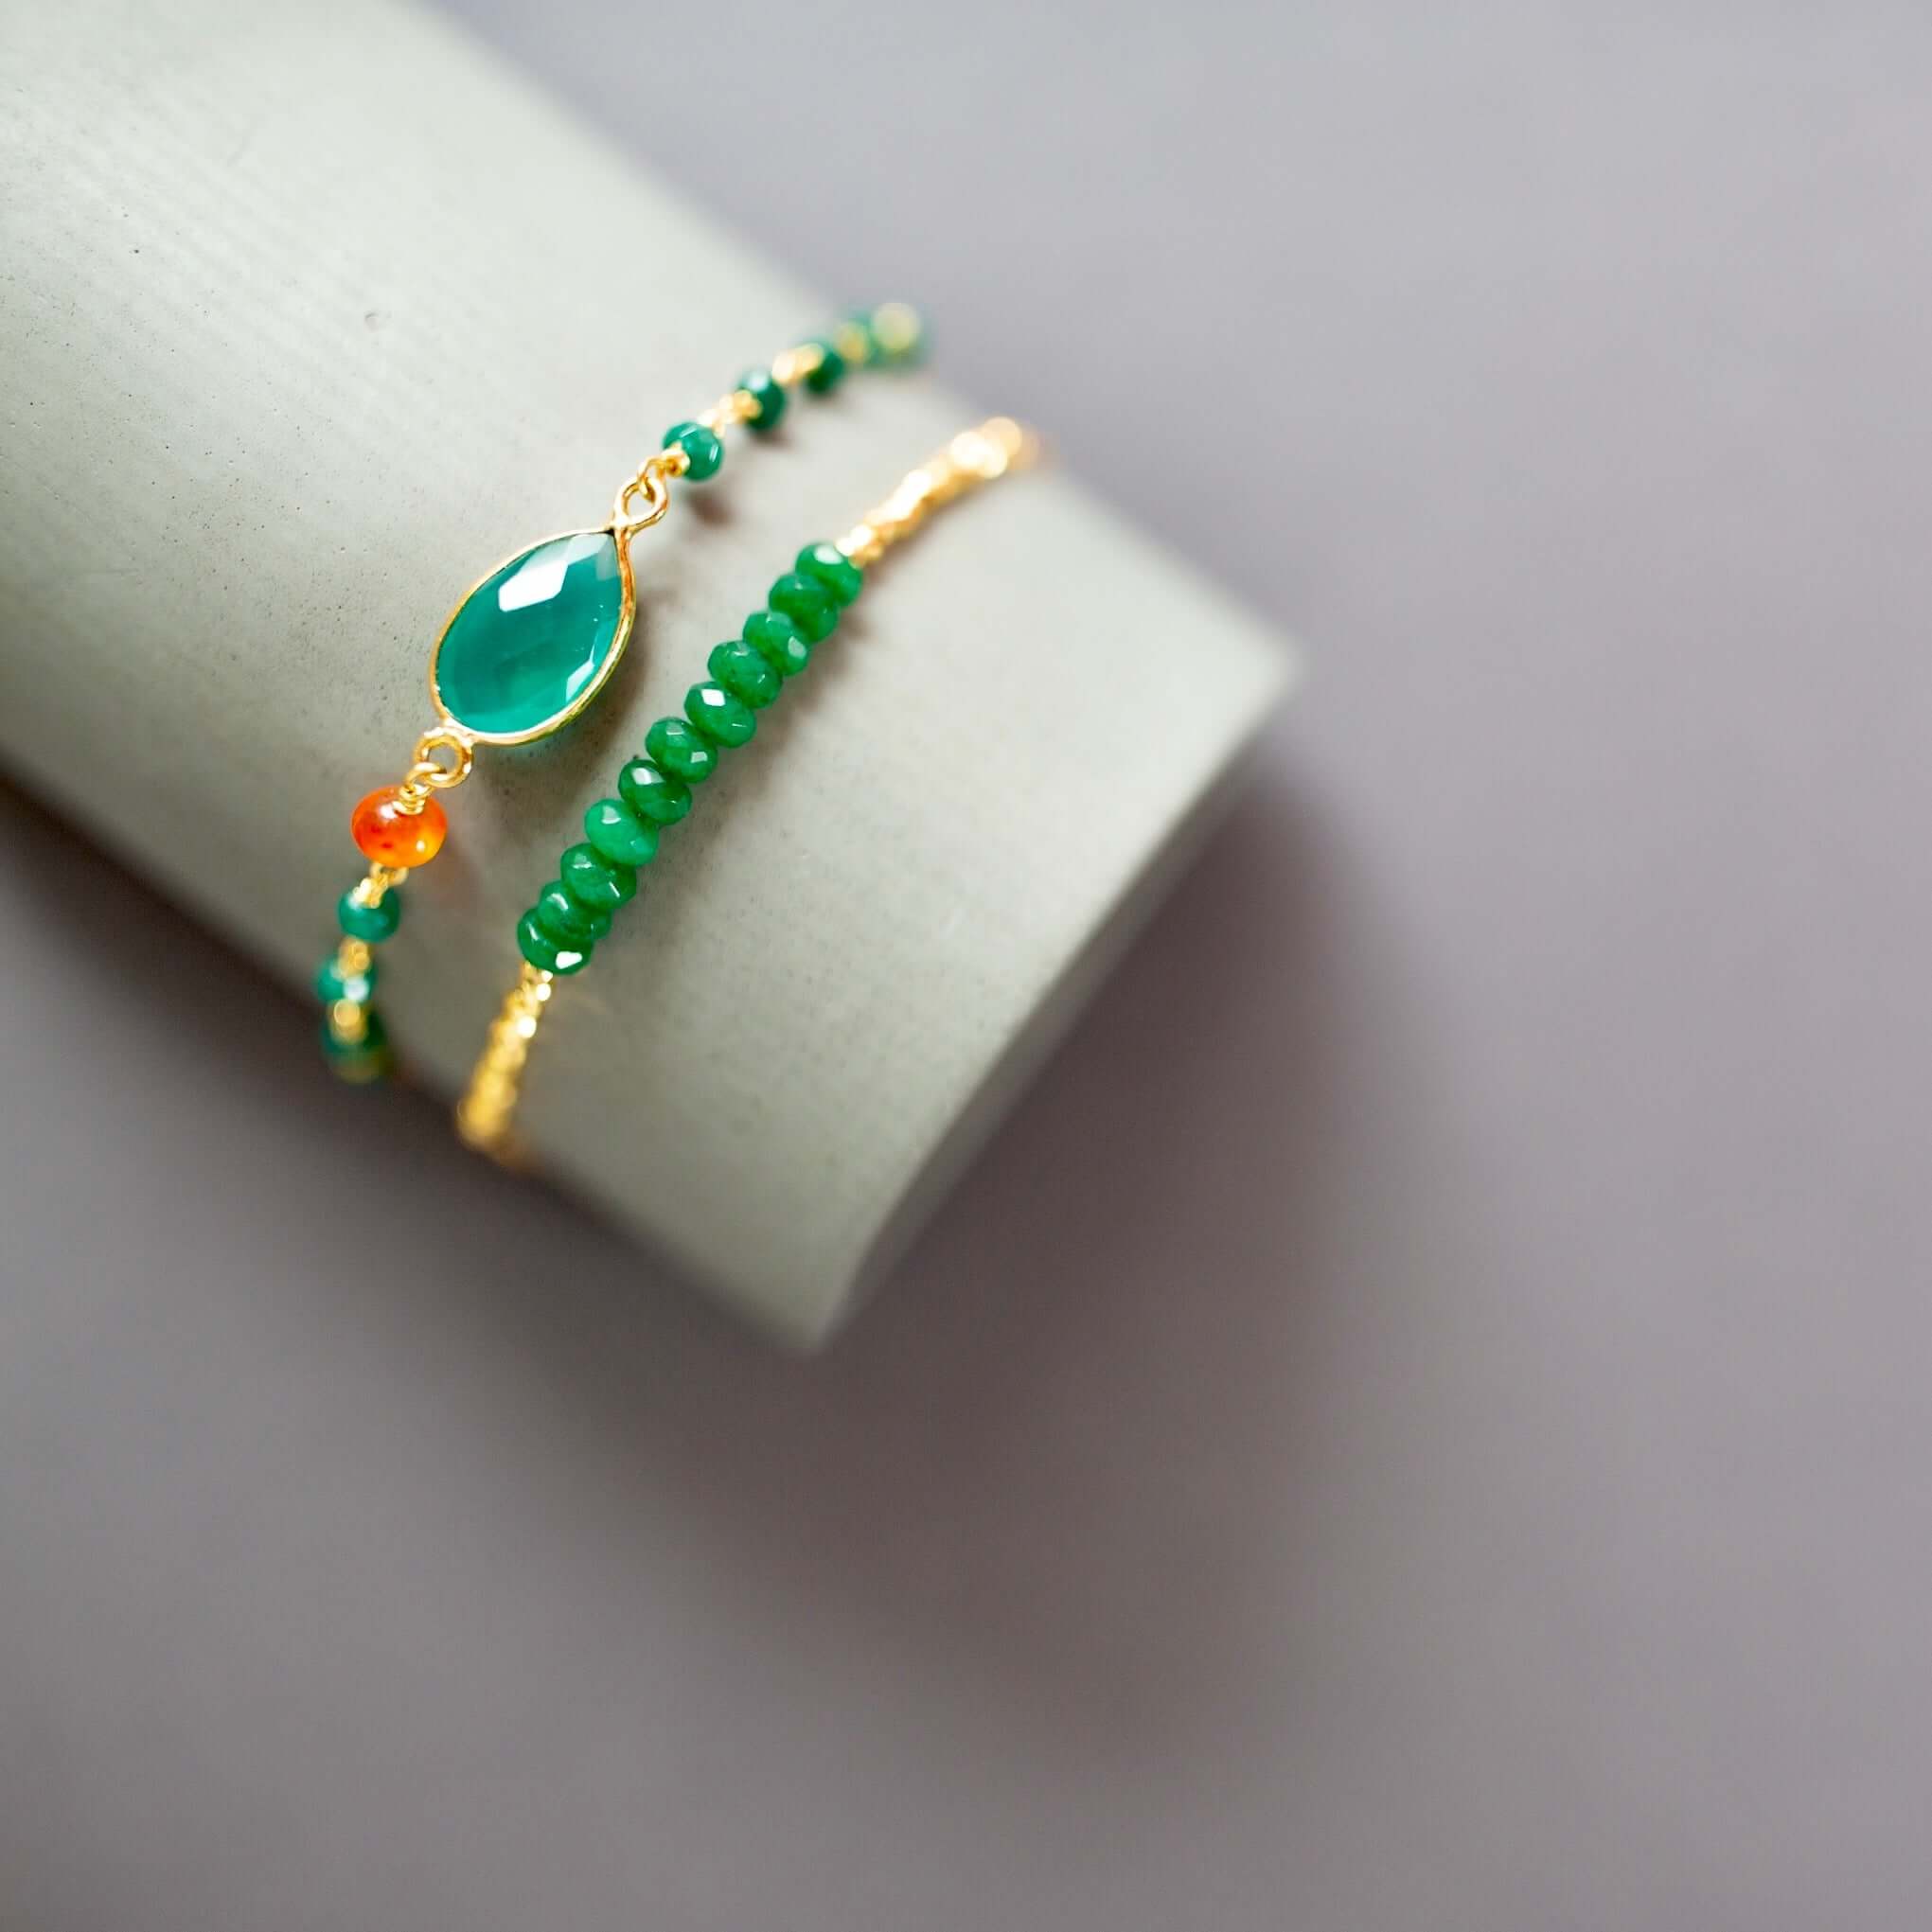 Adjustable Slider Bracelet with Authentic Green Onyx Gemstones